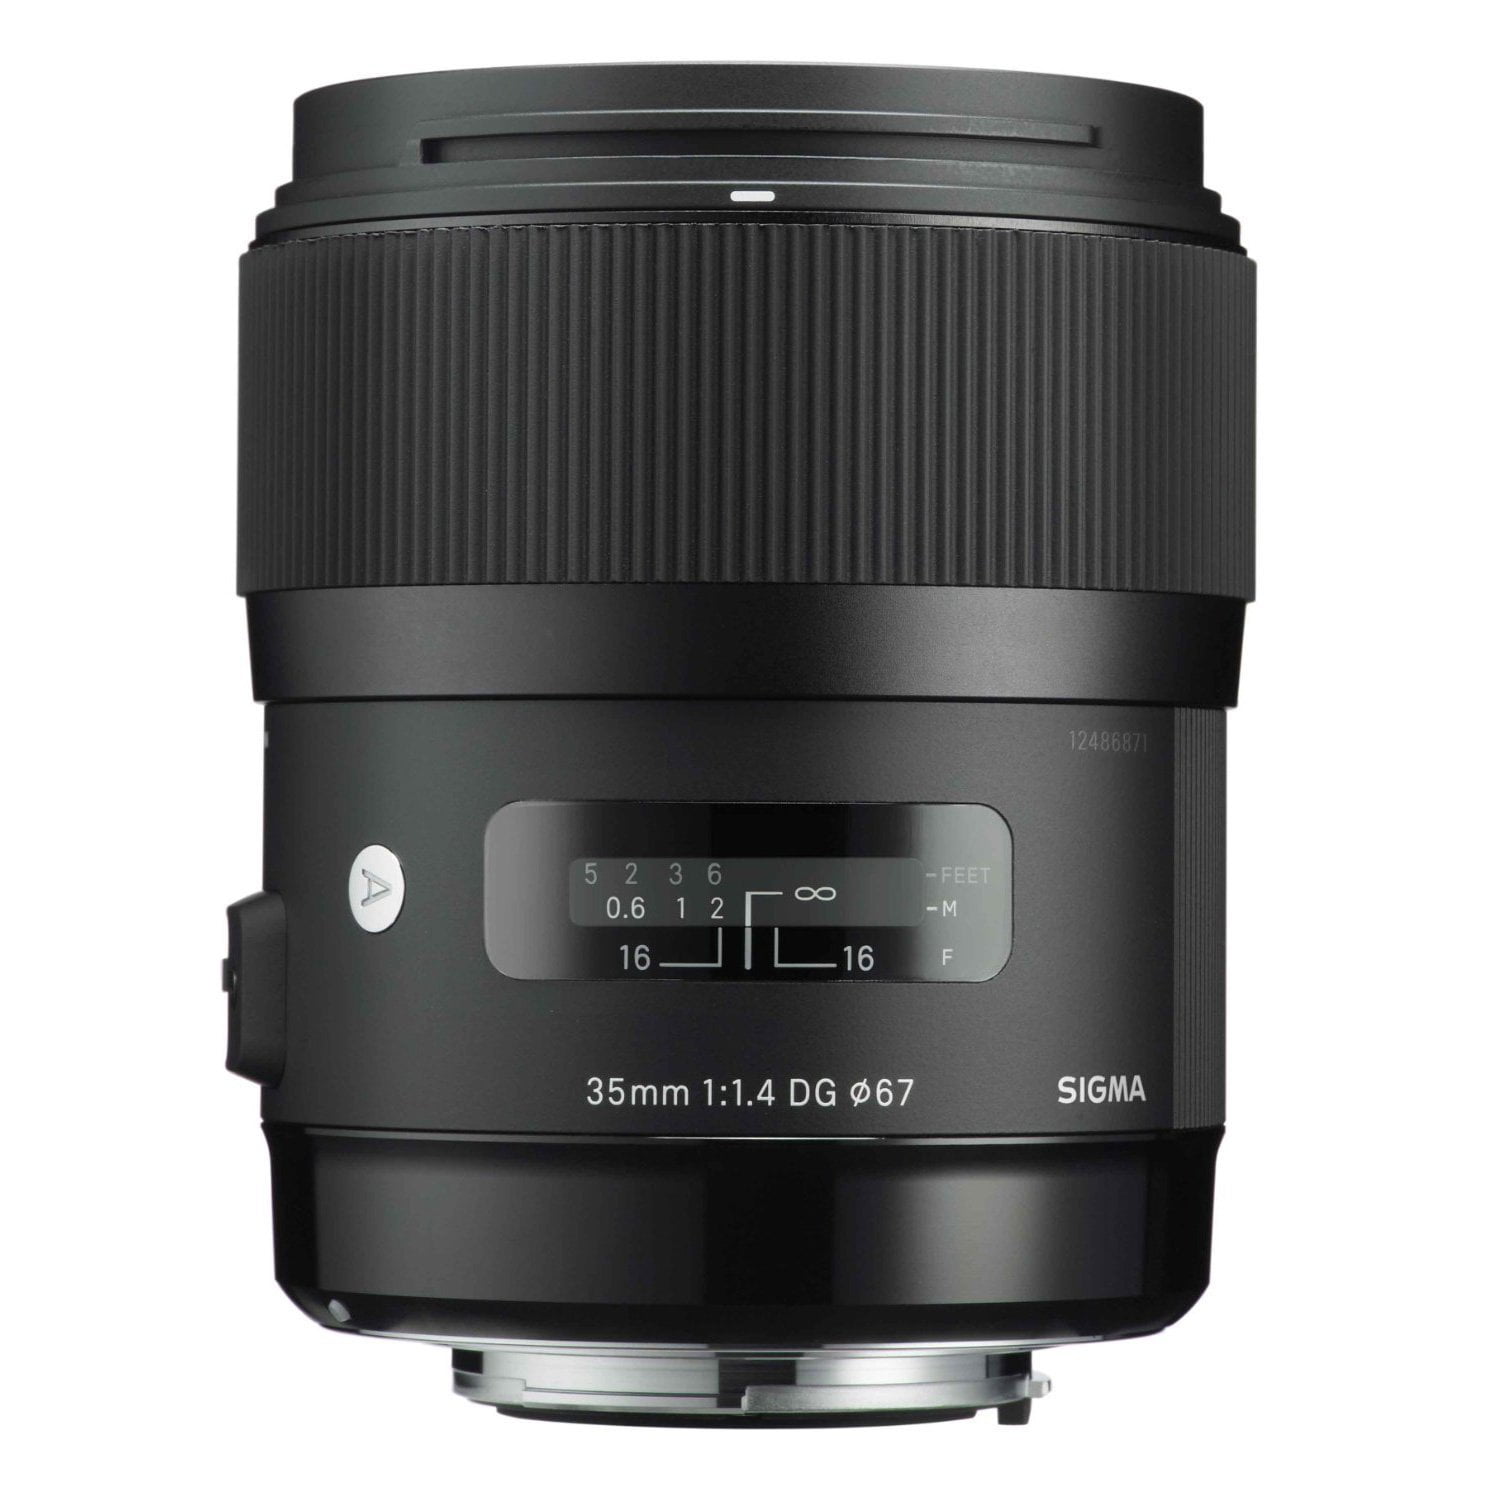 Sigma 35mm F1.4 DG HSM for Nikon (Black) - International Version (No Warranty) - Walmart.com